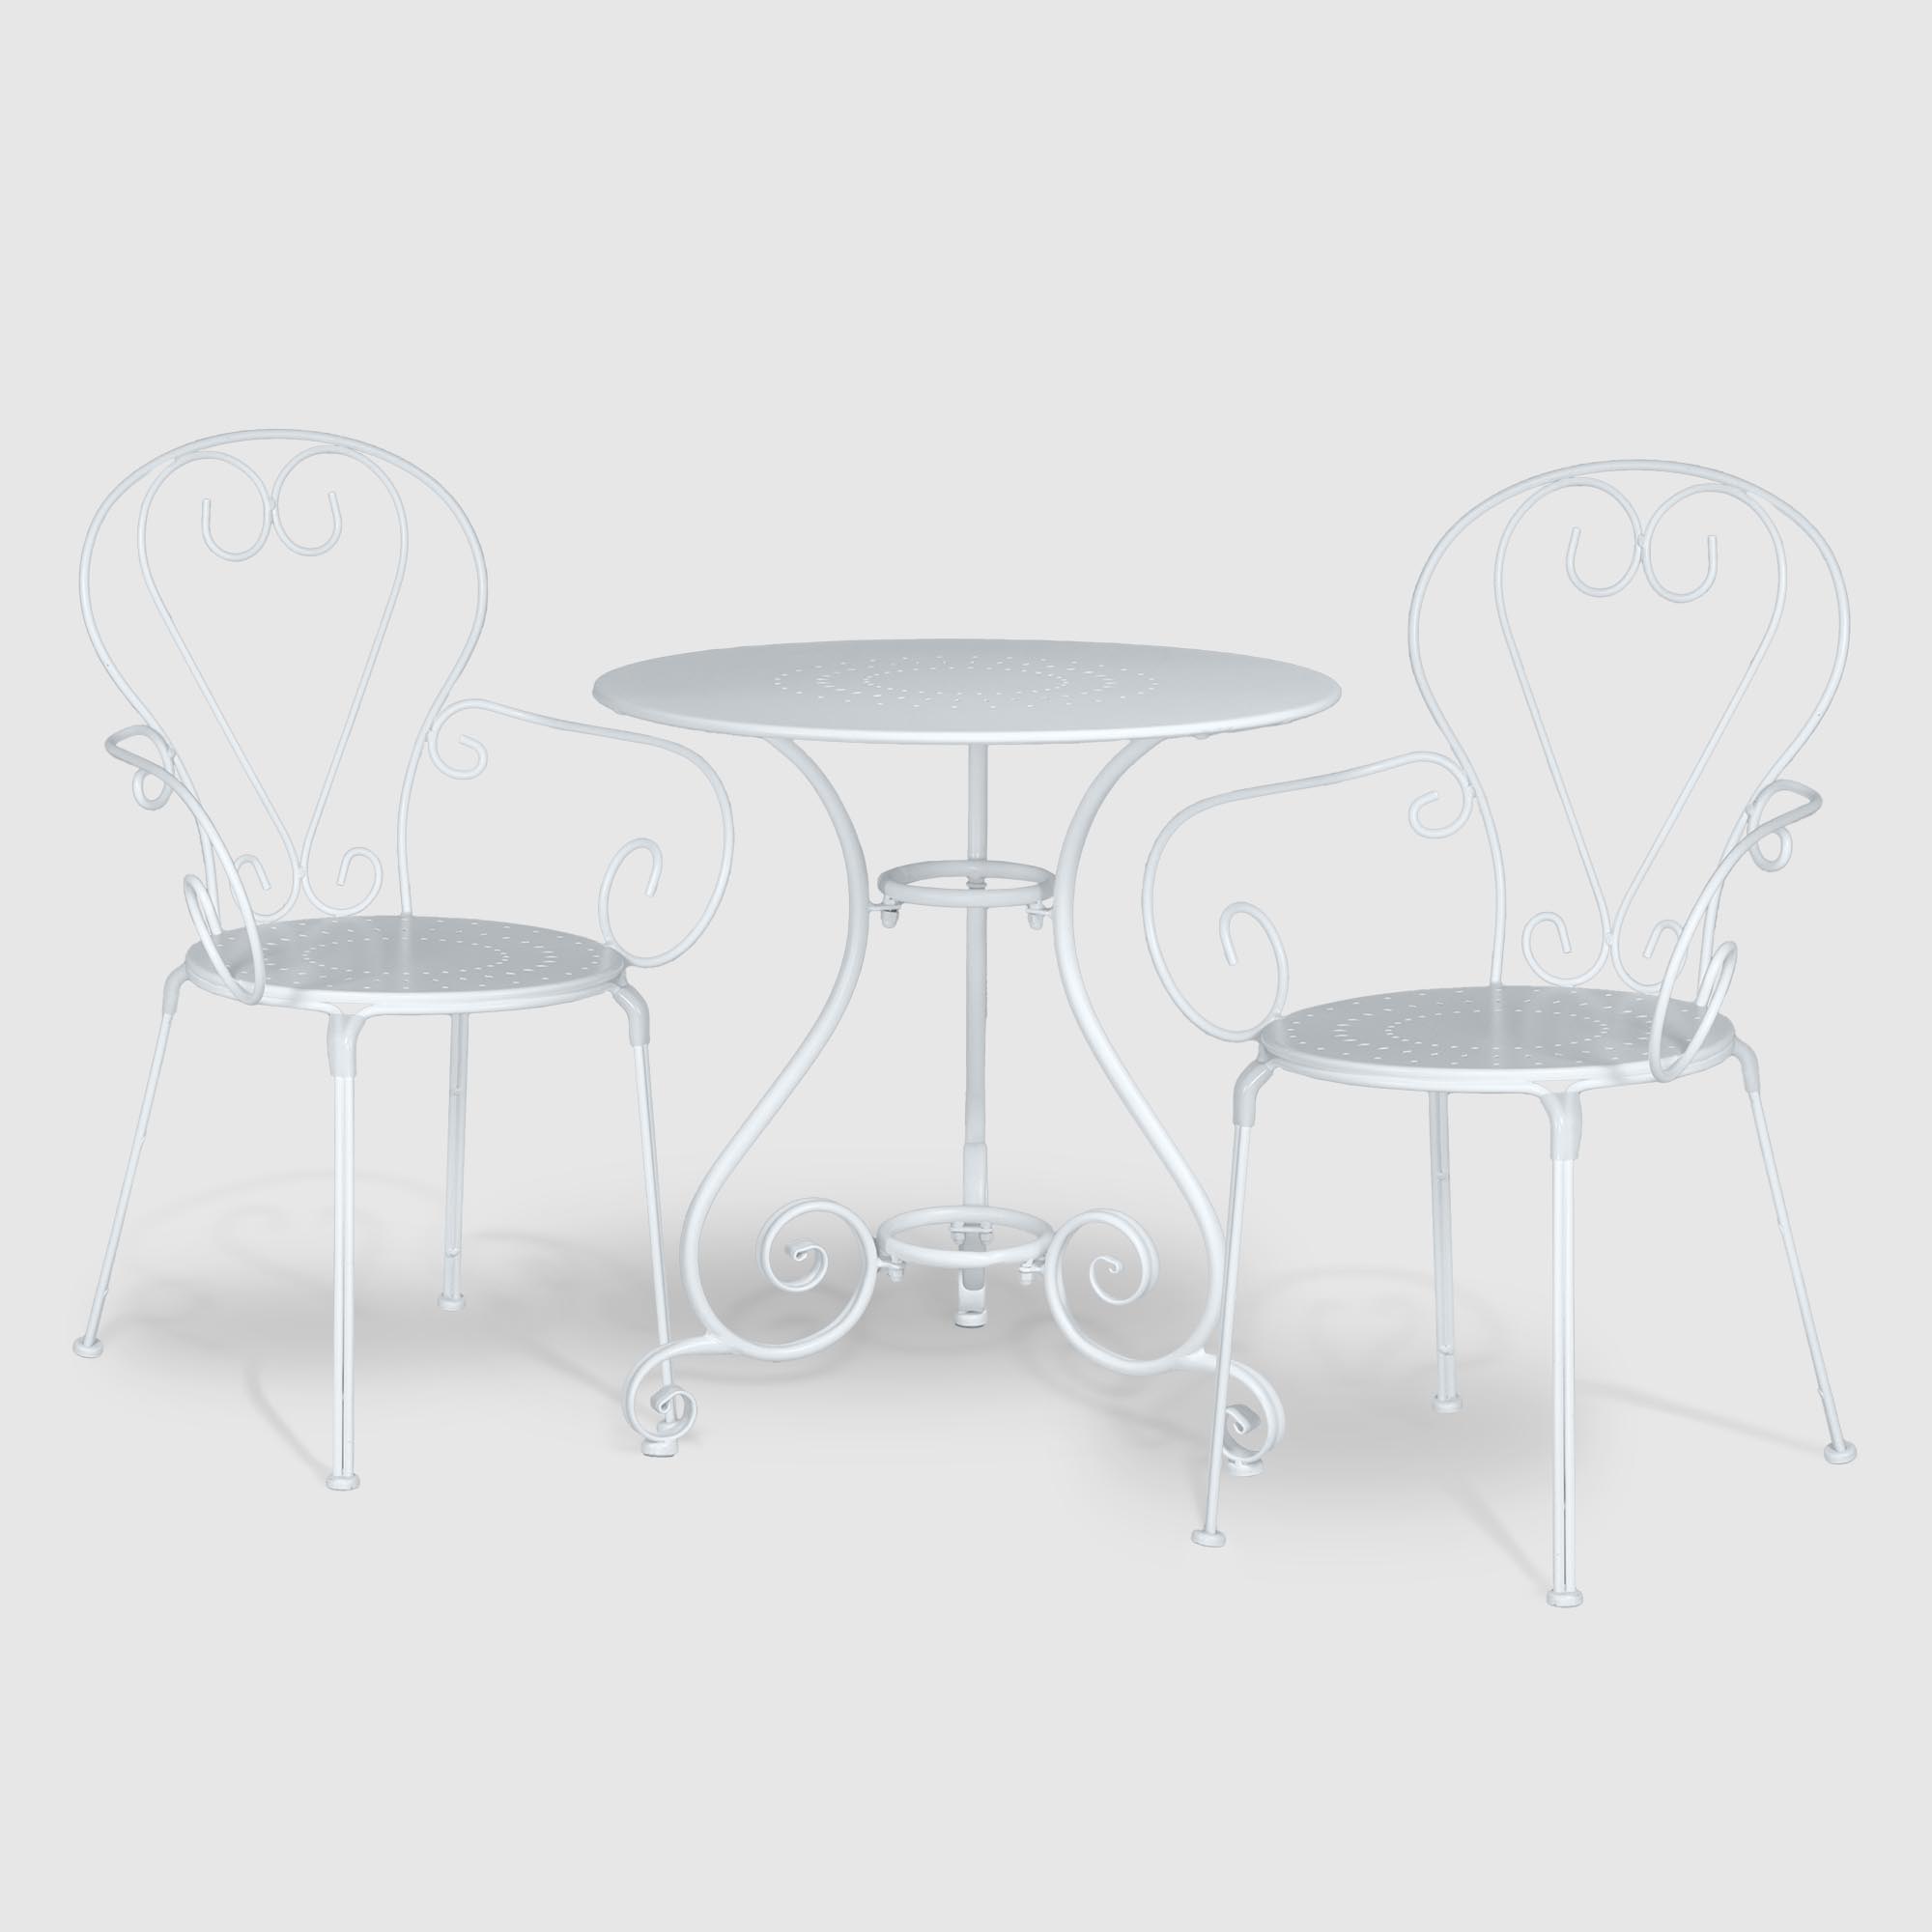 Комплект мебели Bizzotto 3 предмета, цвет белый, размер 49x49x89 см - фото 1